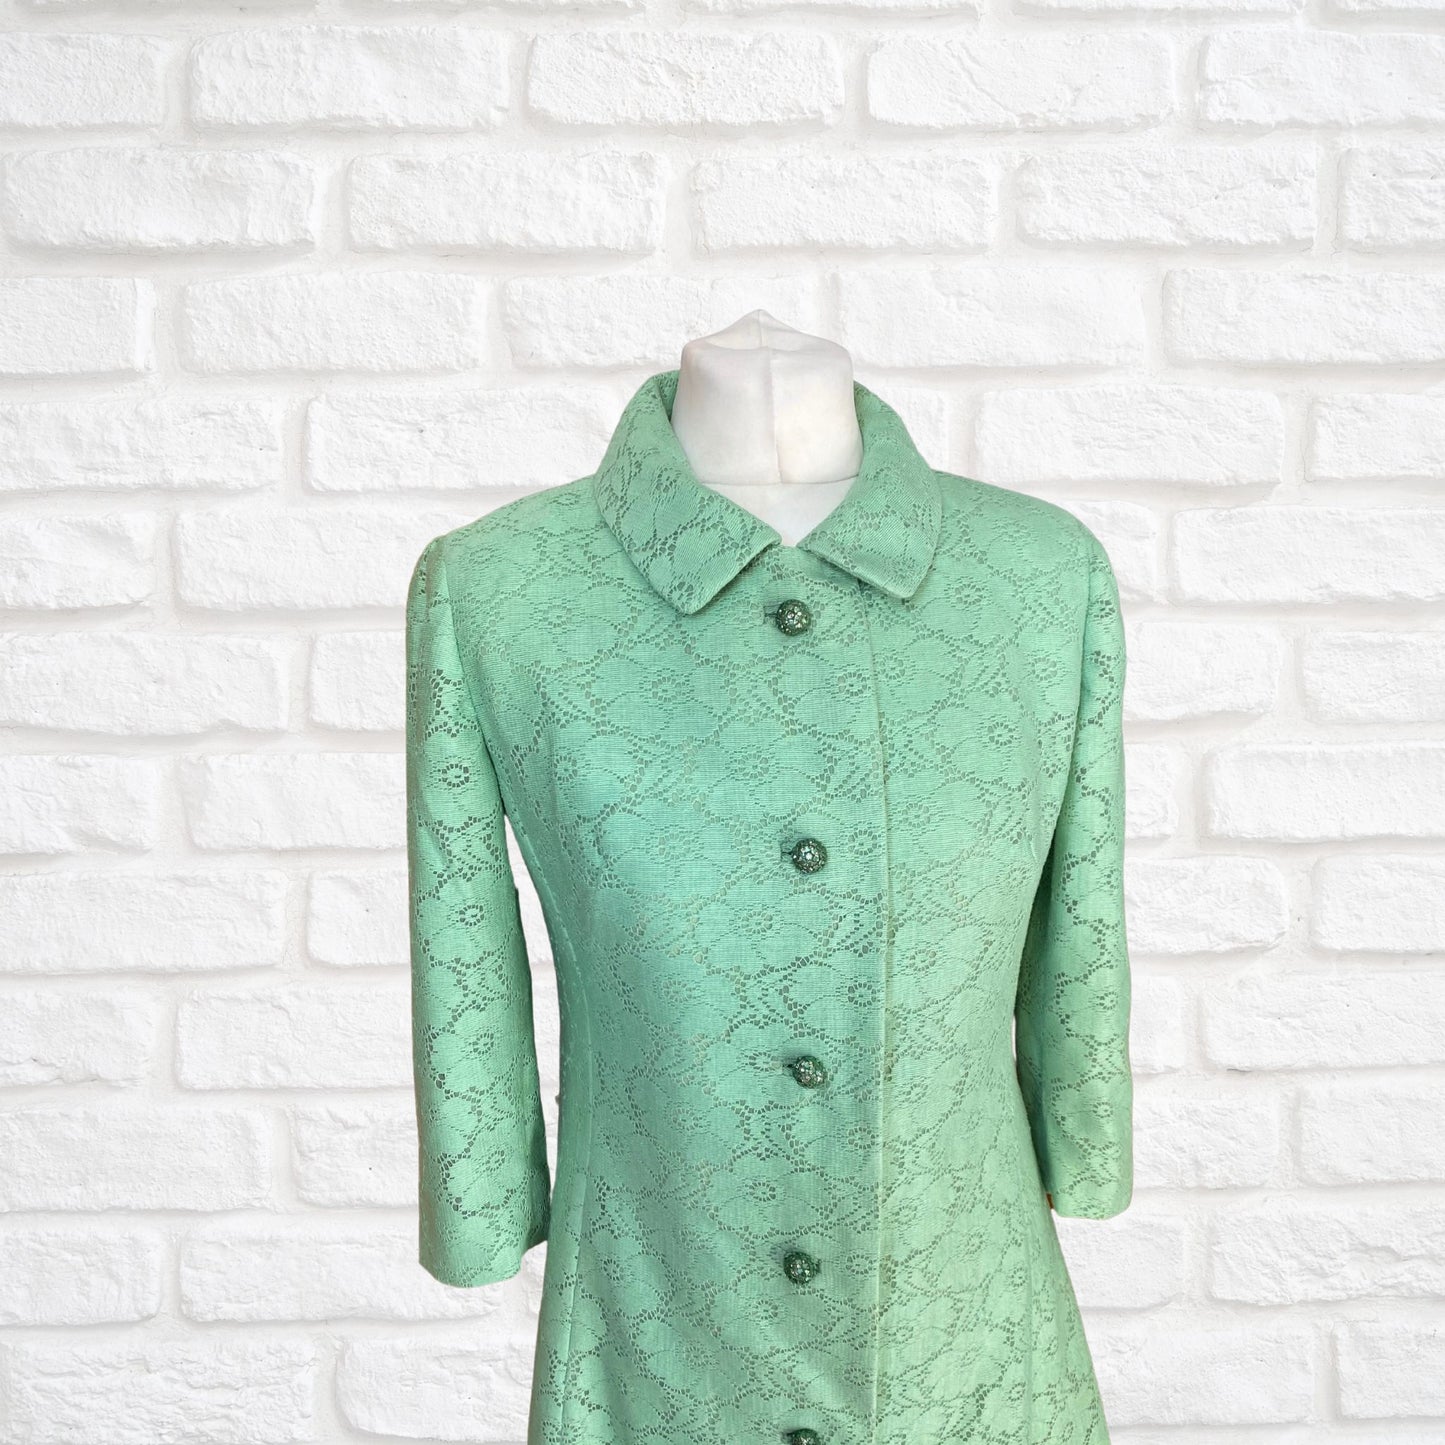 60s style mint green vintage lace coat/ dress. Approx UK size 10-12